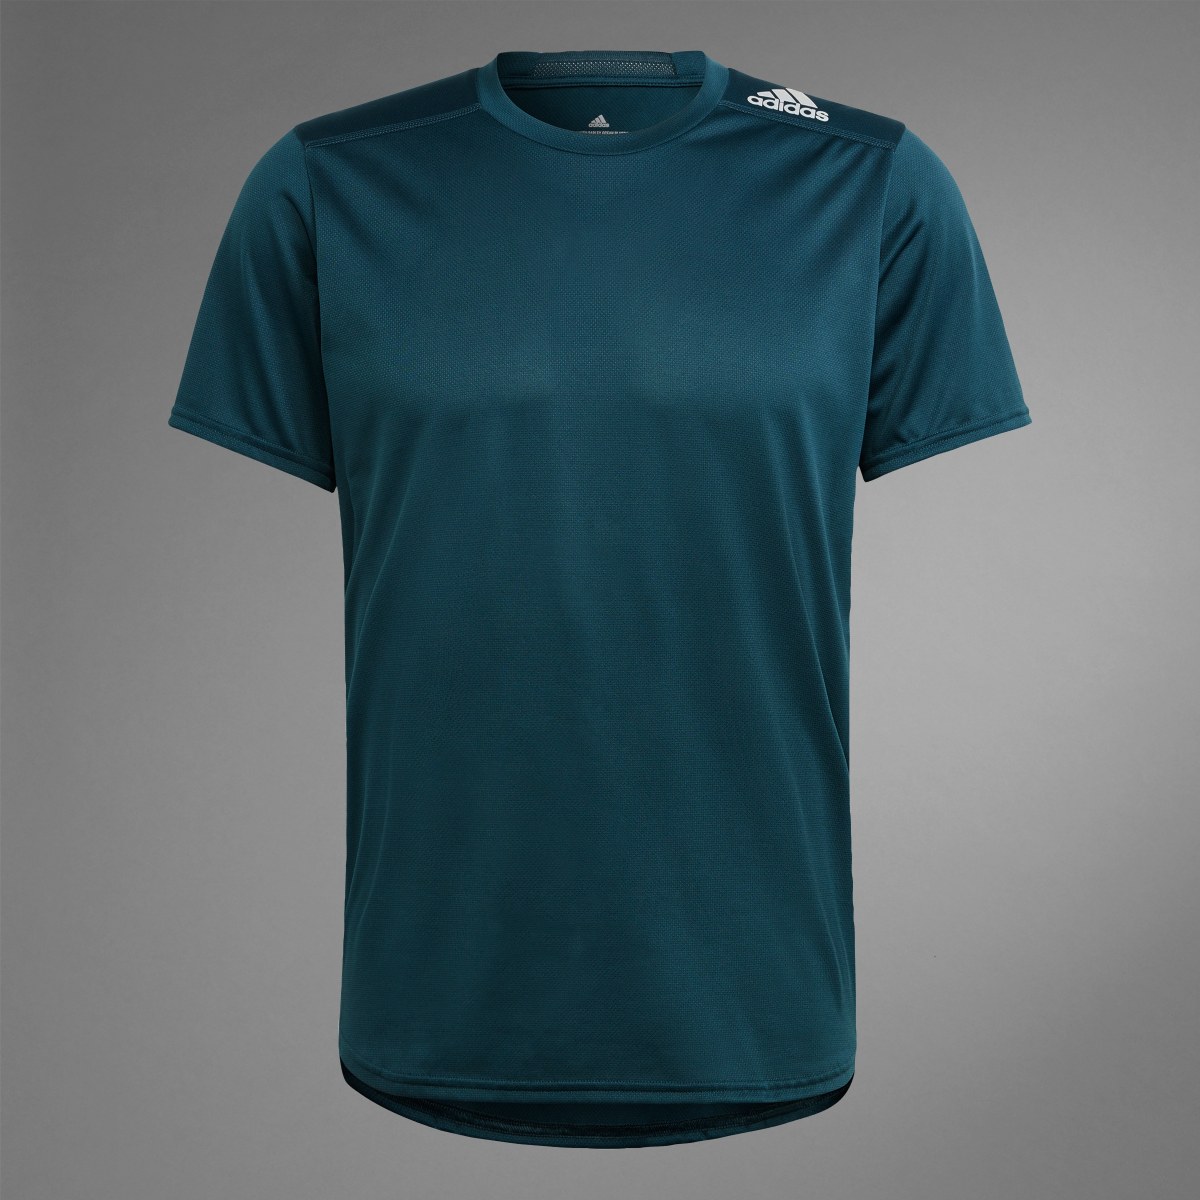 Adidas T-shirt Designed 4 Running. 9